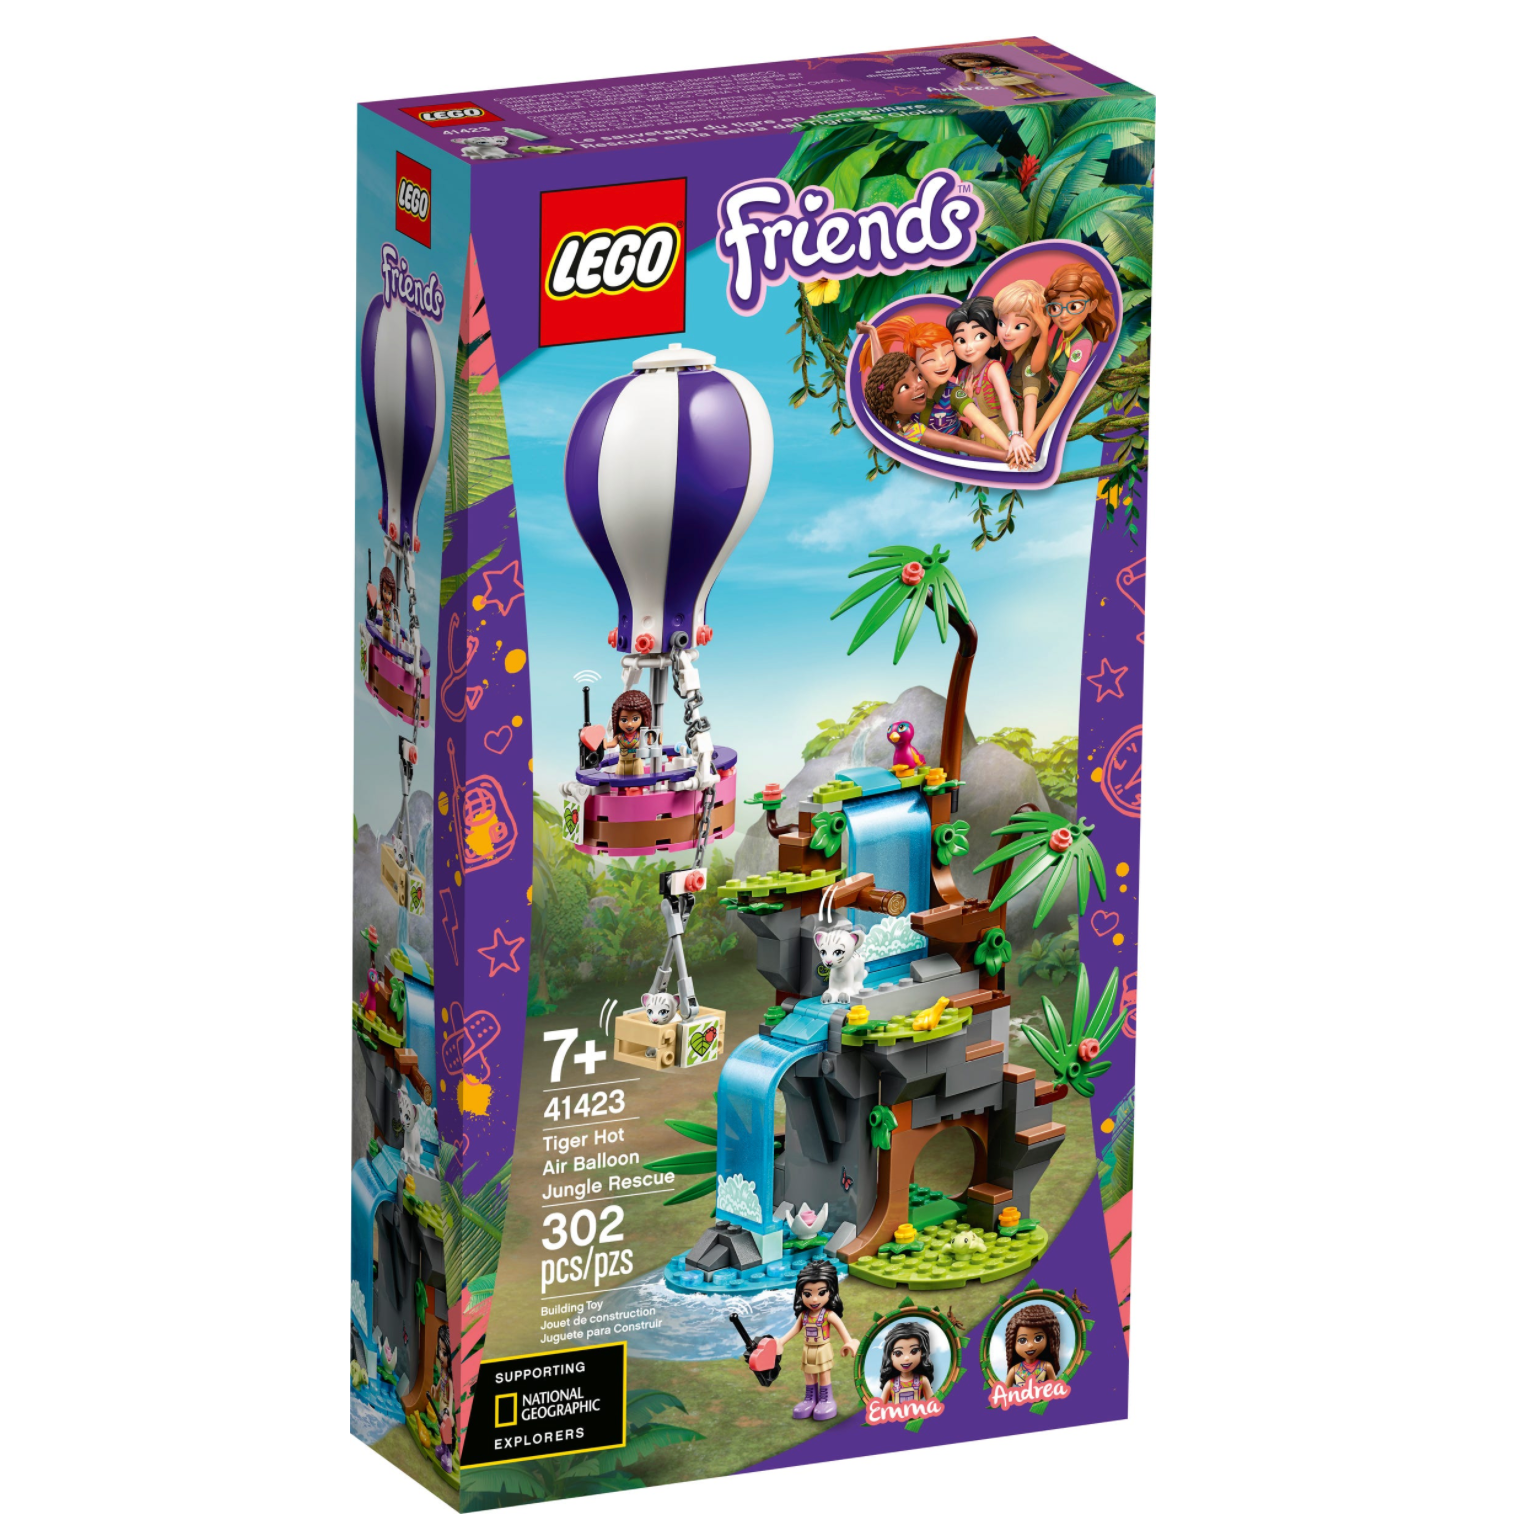 LEGO: Friends - Tiger Hot Air Balloon Jungle Rescue